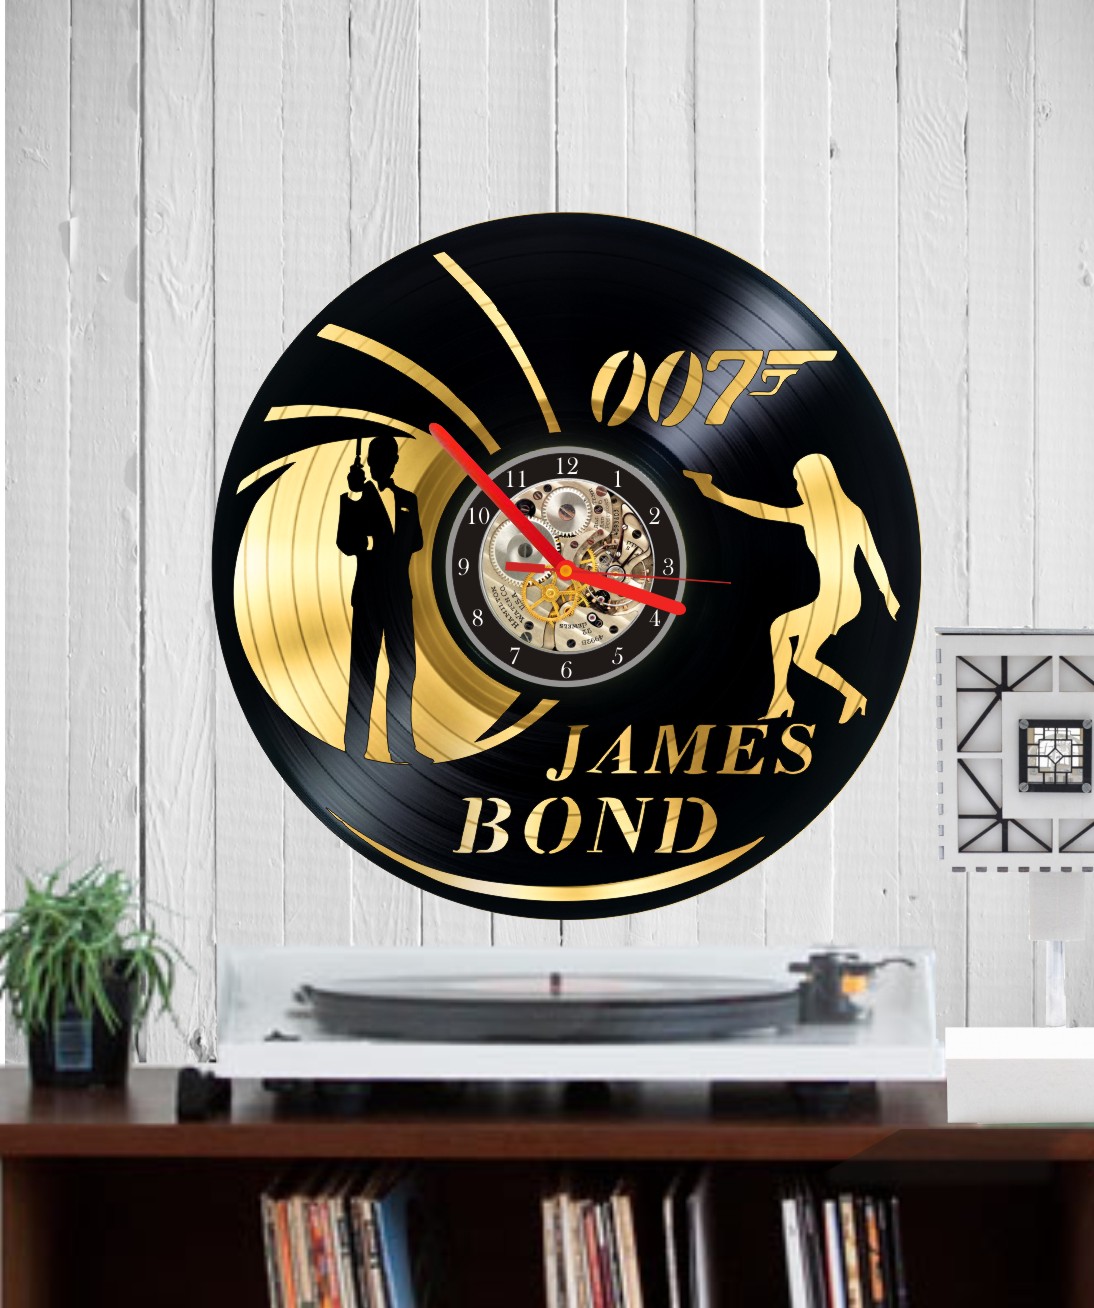 007 James Bond Vinyl Record Clock Wooden Wall Clock Handmade Home Decor Gift 